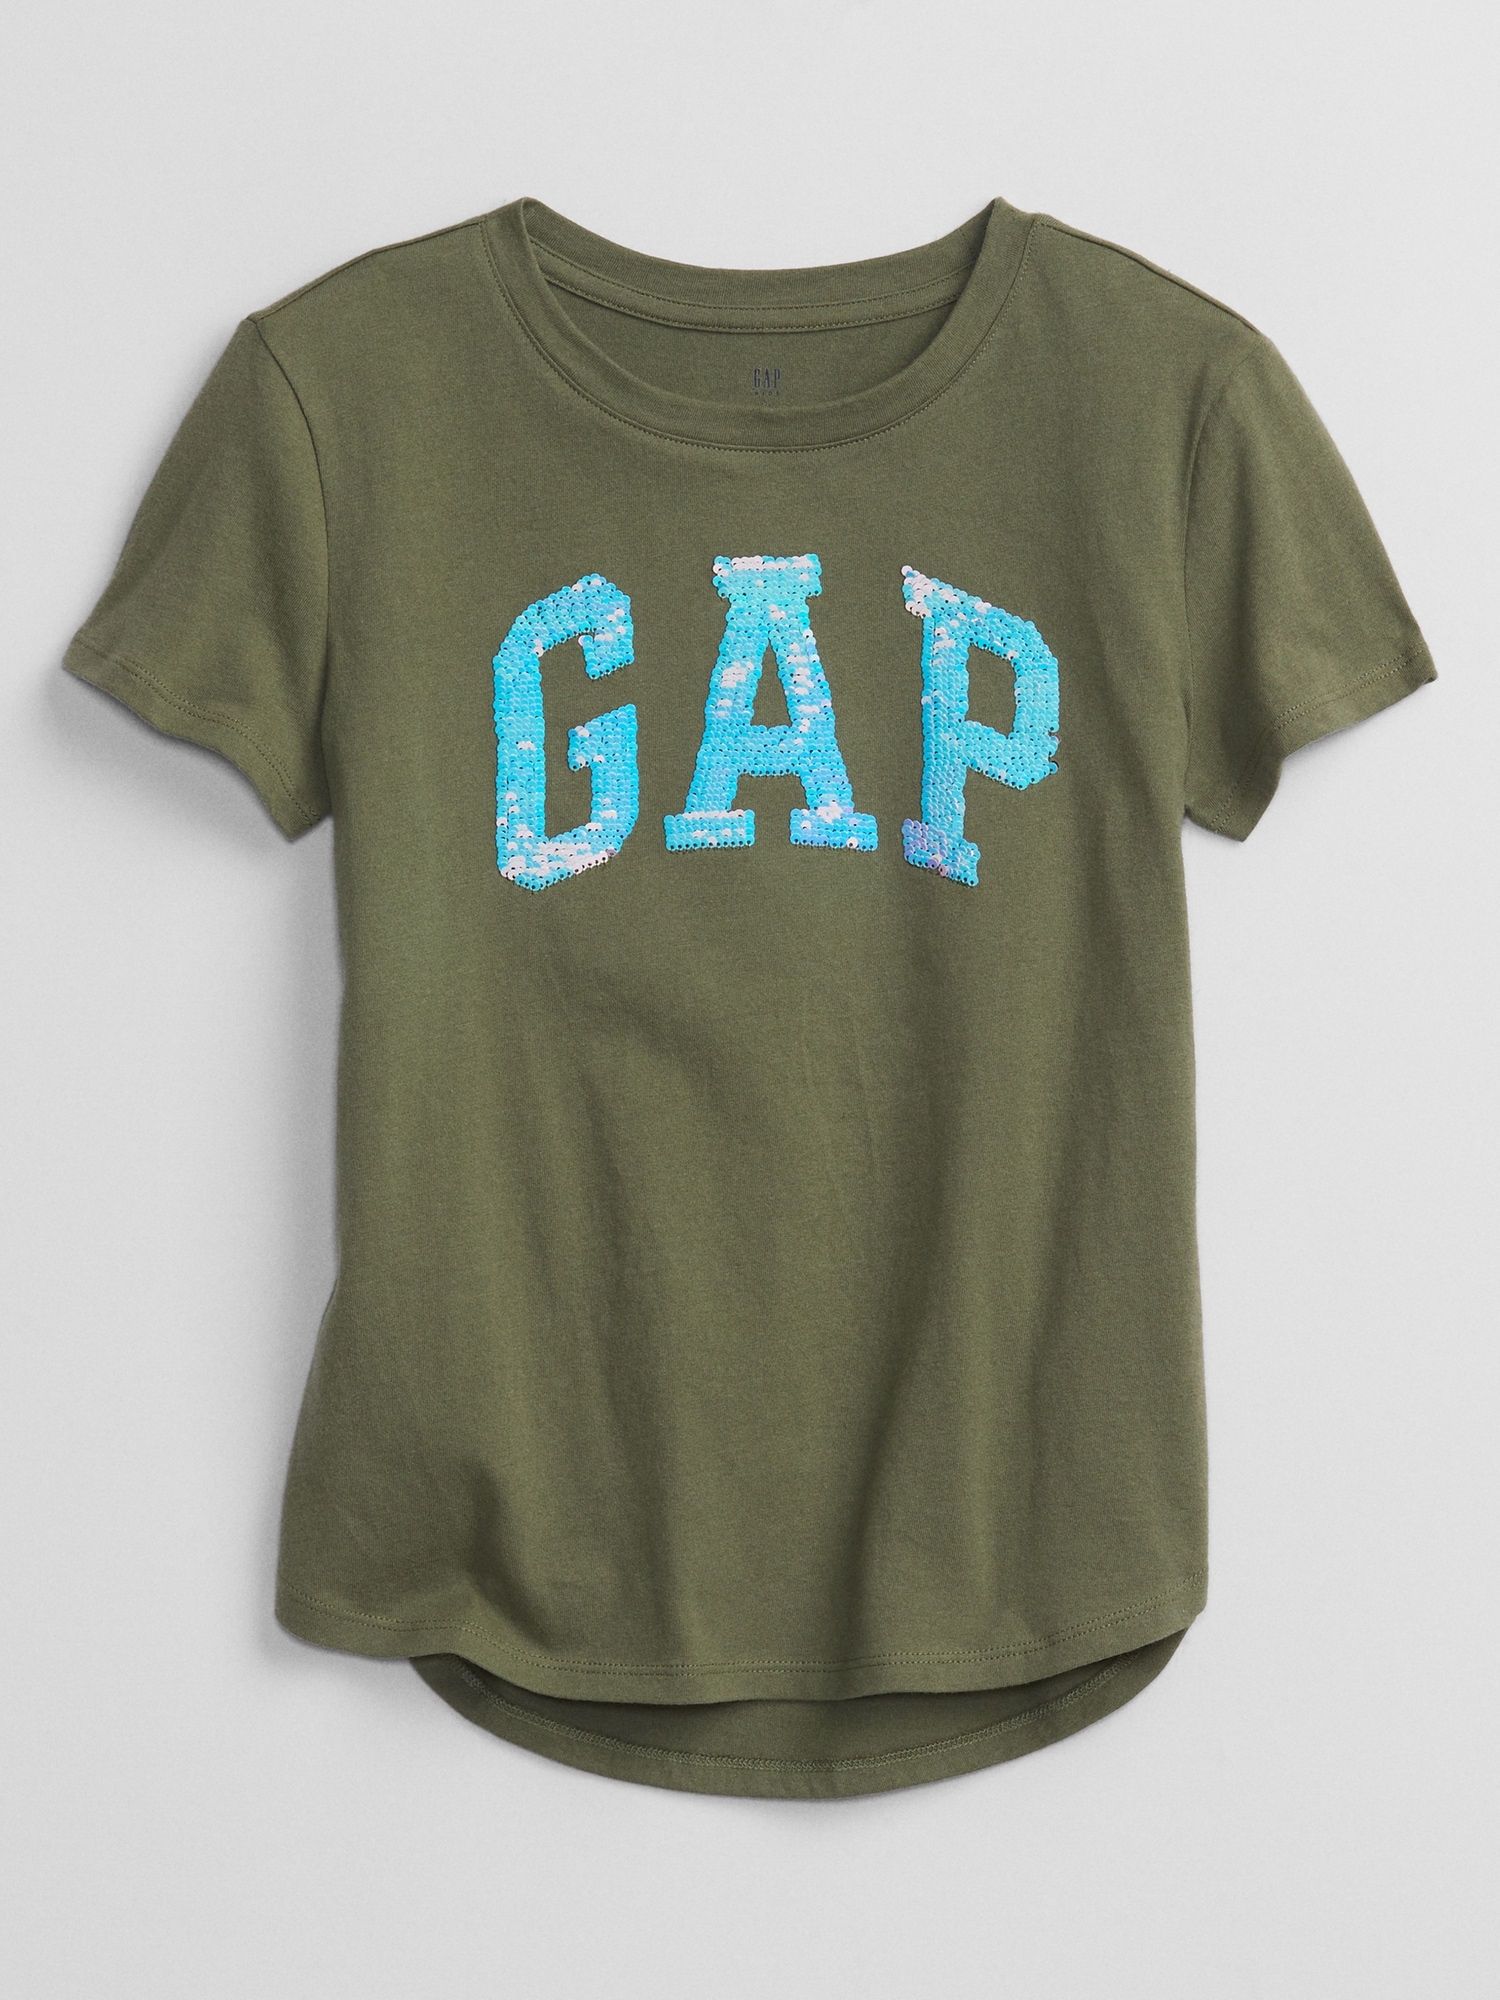 Kids Flippy Gap Logo T-Shirt | Gap Factory